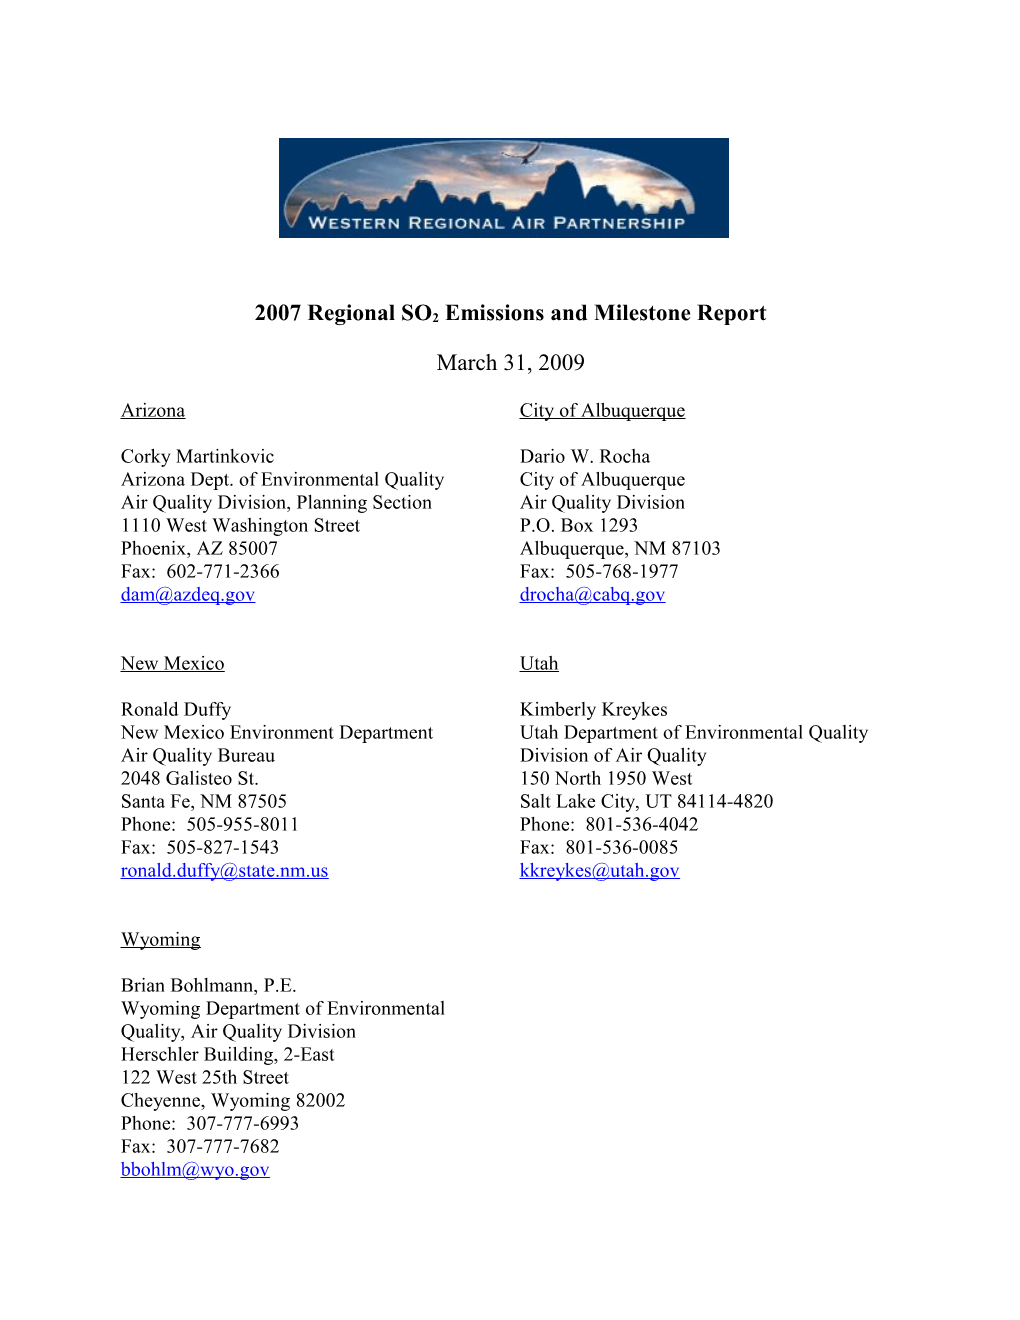 2007 Regional SO2 Emissions and Milestone Report